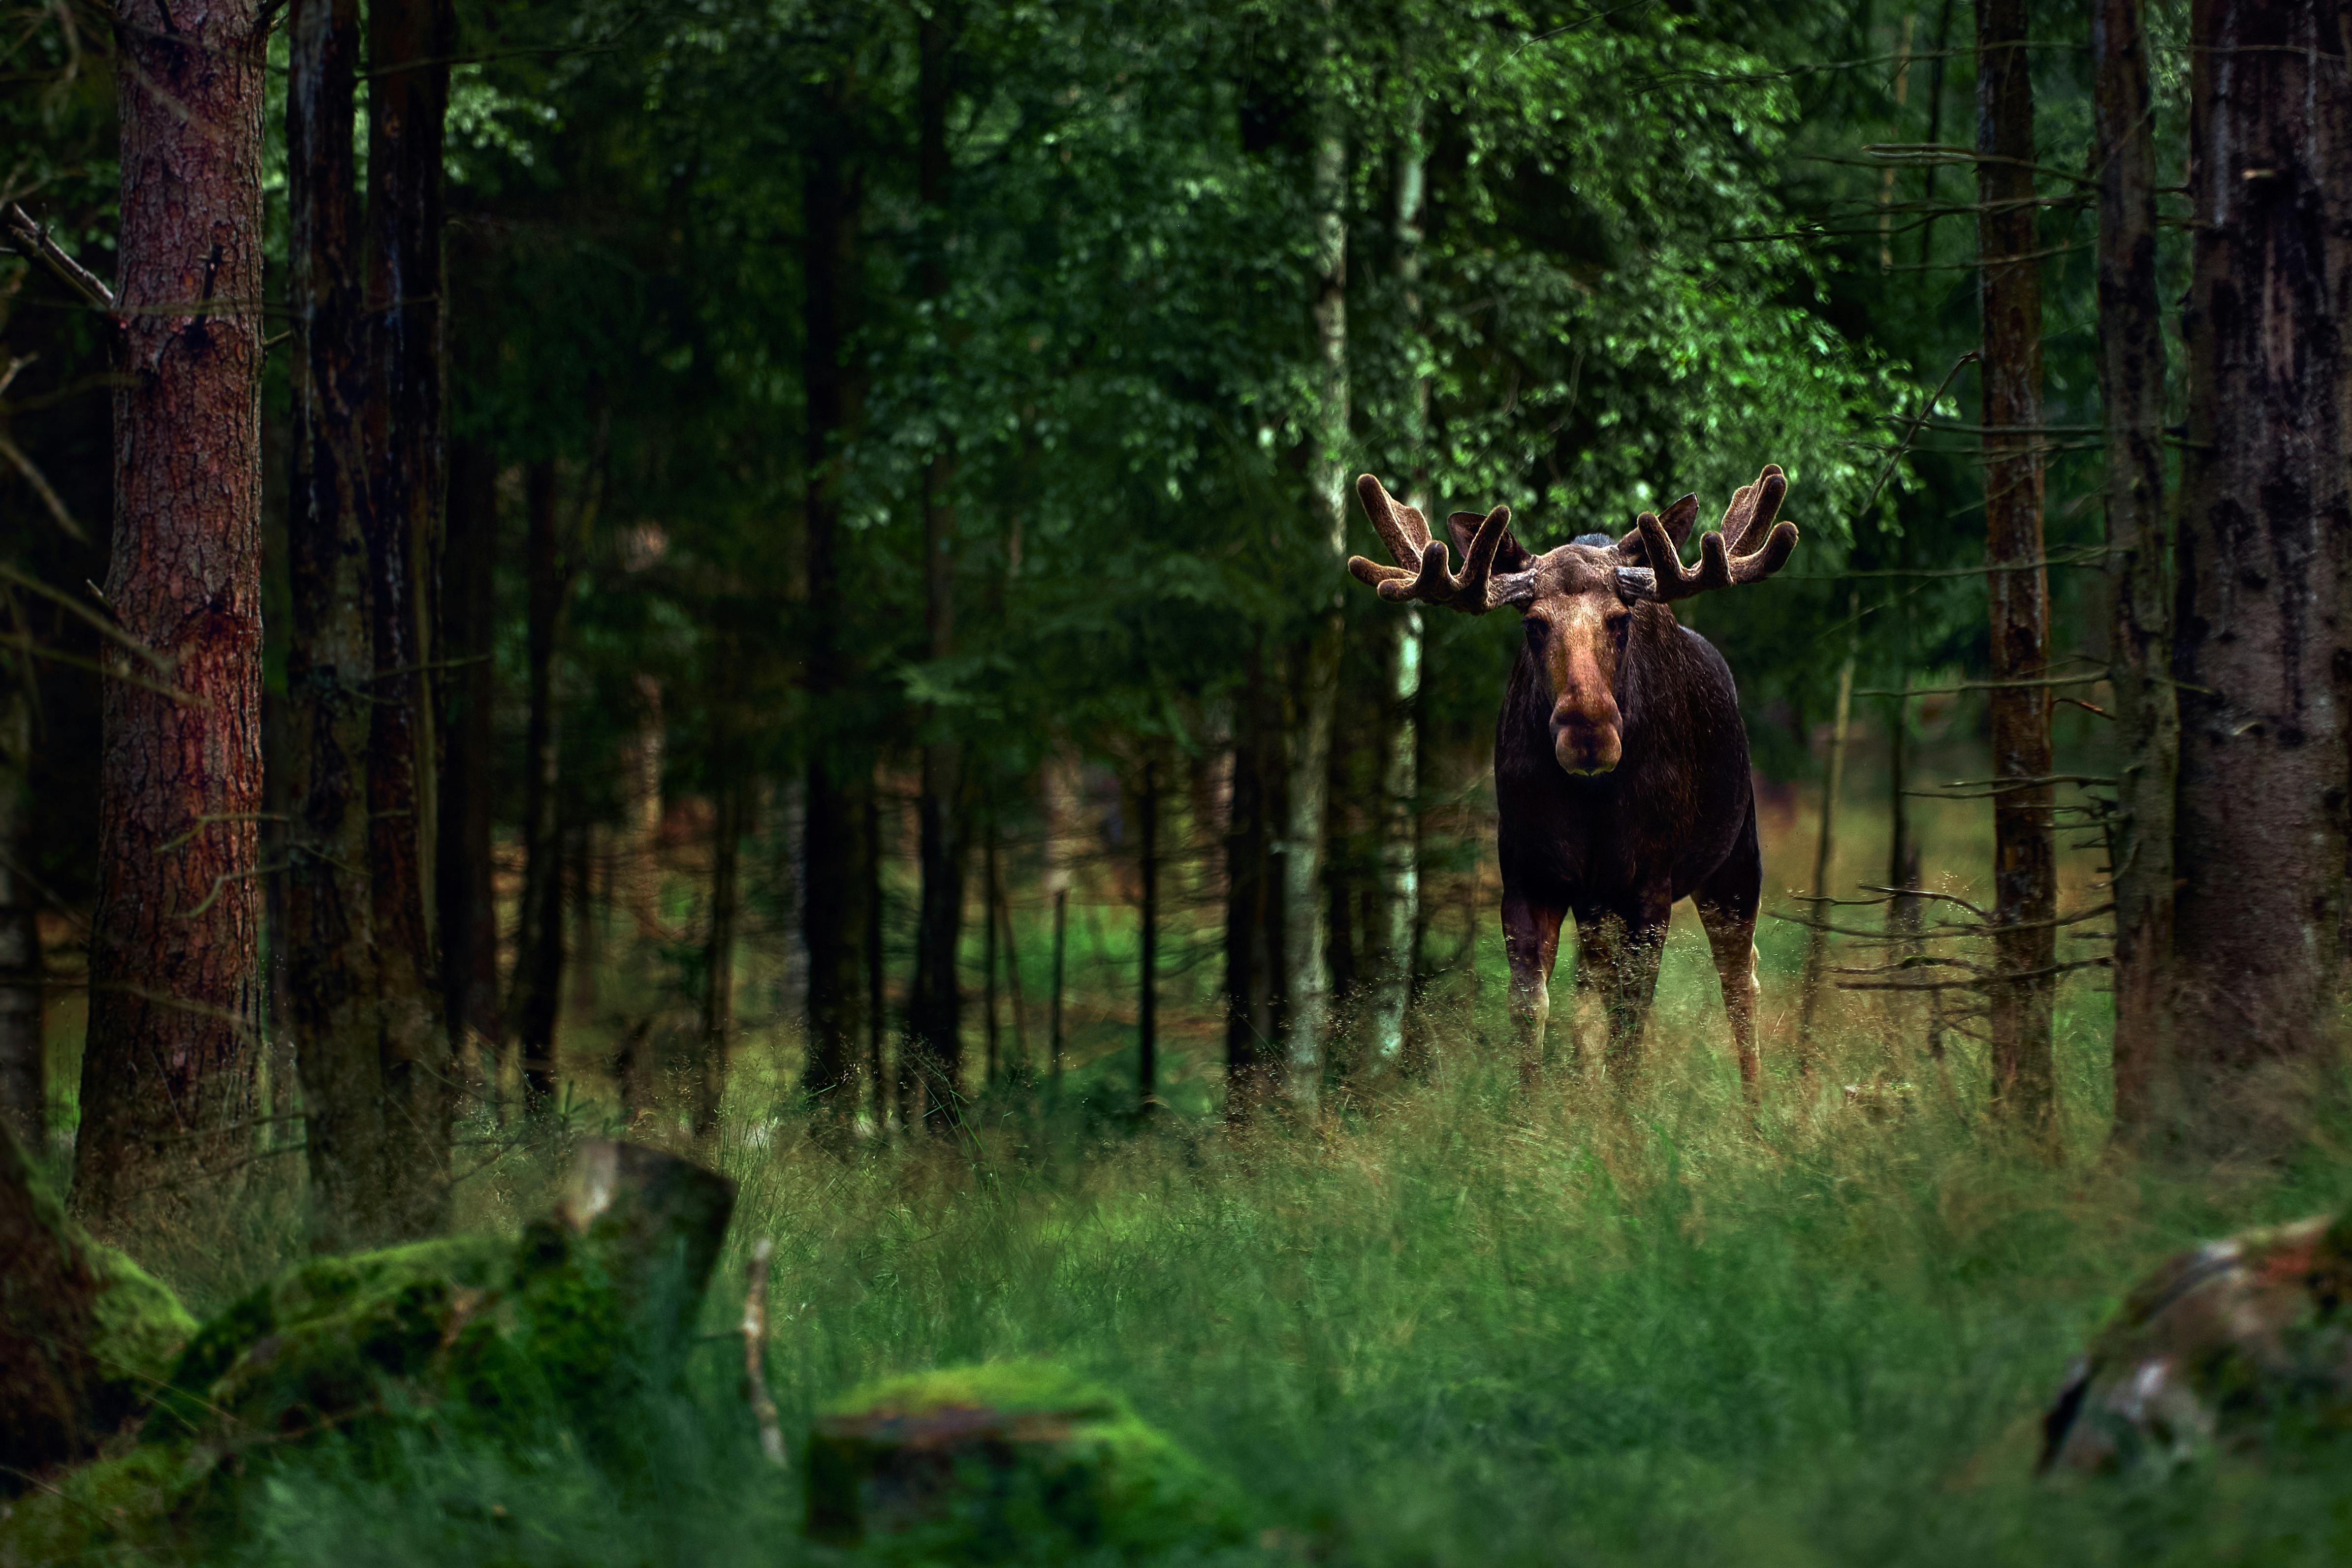 Spot moose on a wildlife safari